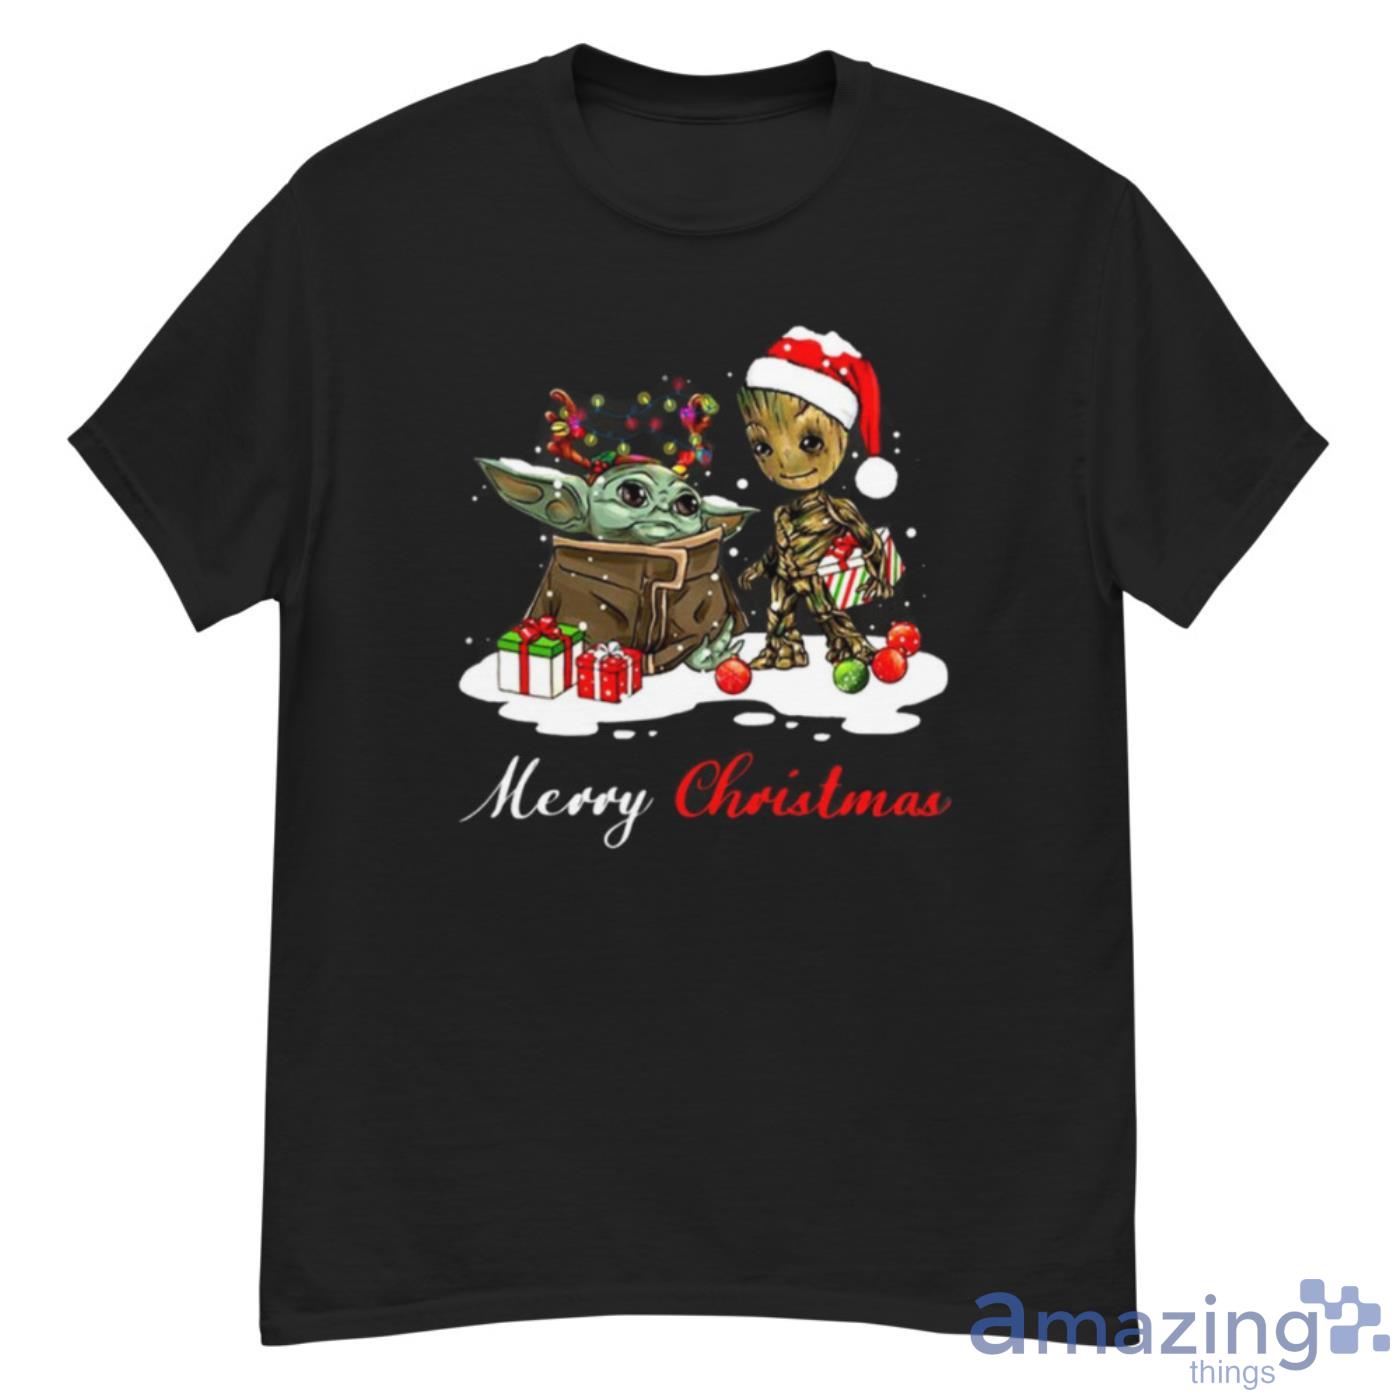 Marvel Guardians Merry Christmas Santa Groot And Baby Yoda T-Shirt Star Wars Christmas Shirt - G500 Men’s Classic T-Shirt